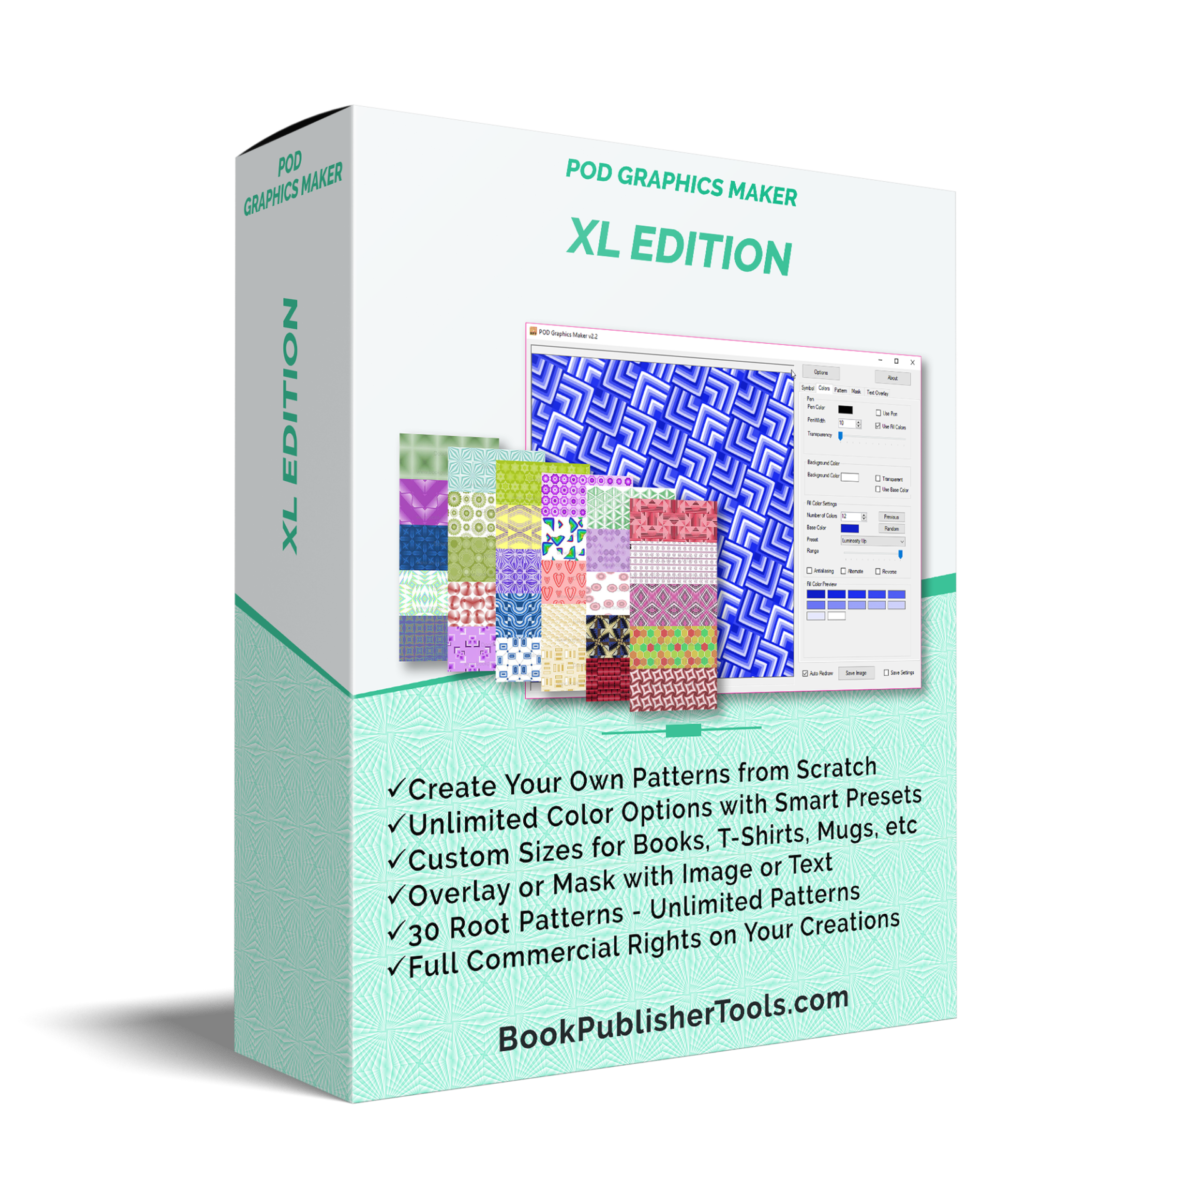 POD Graphics Maker XL Edition software box